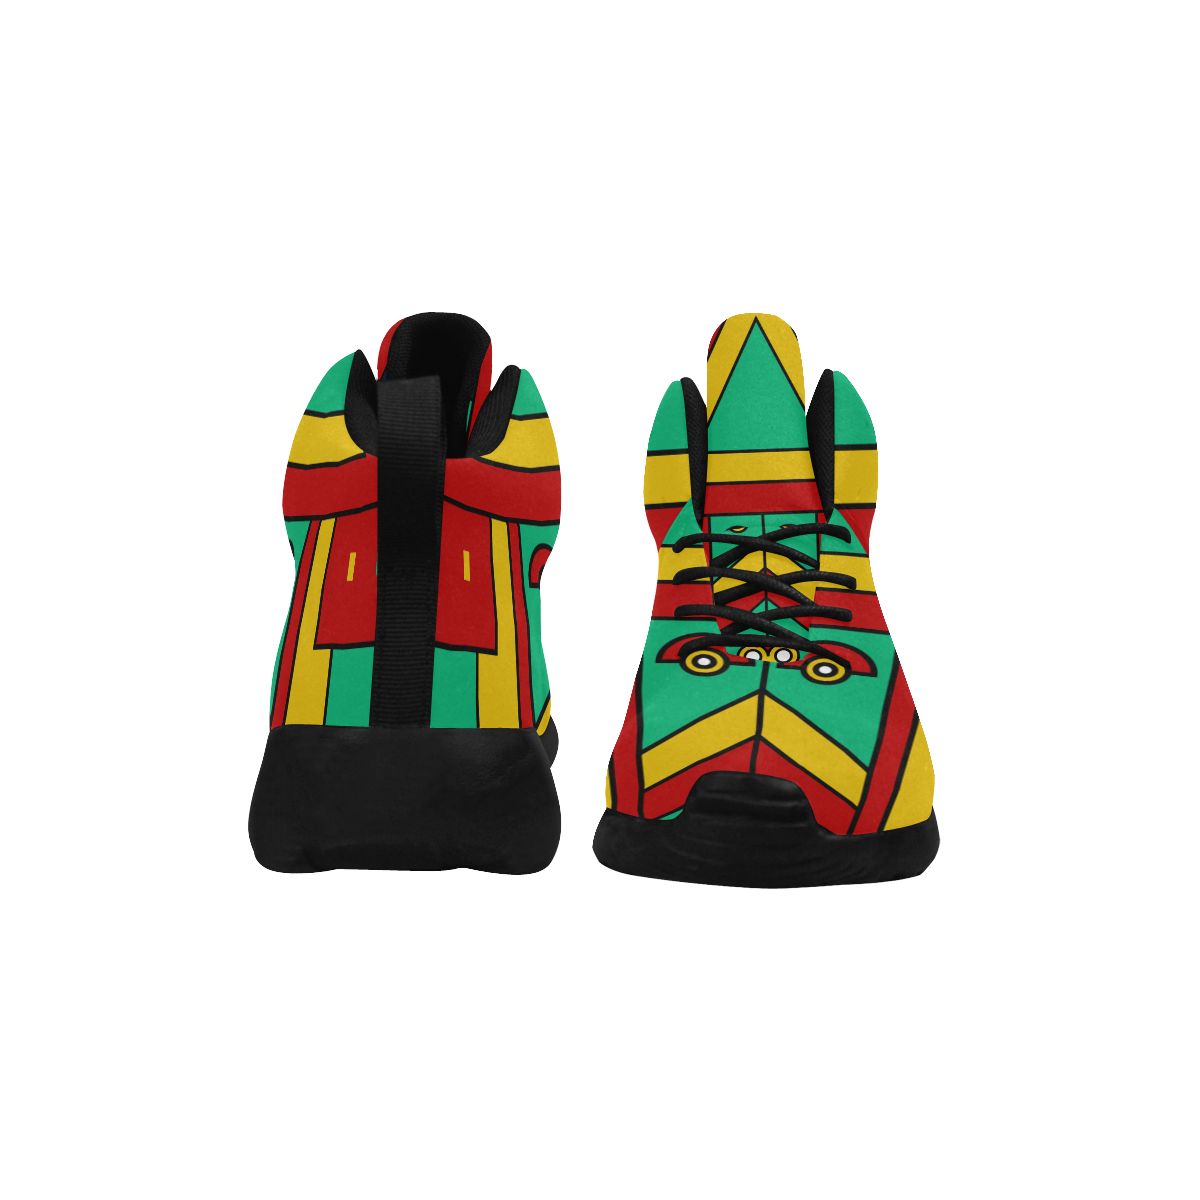 Aztec Spiritual Tribal Men's Chukka Training Shoes (Model 57502)